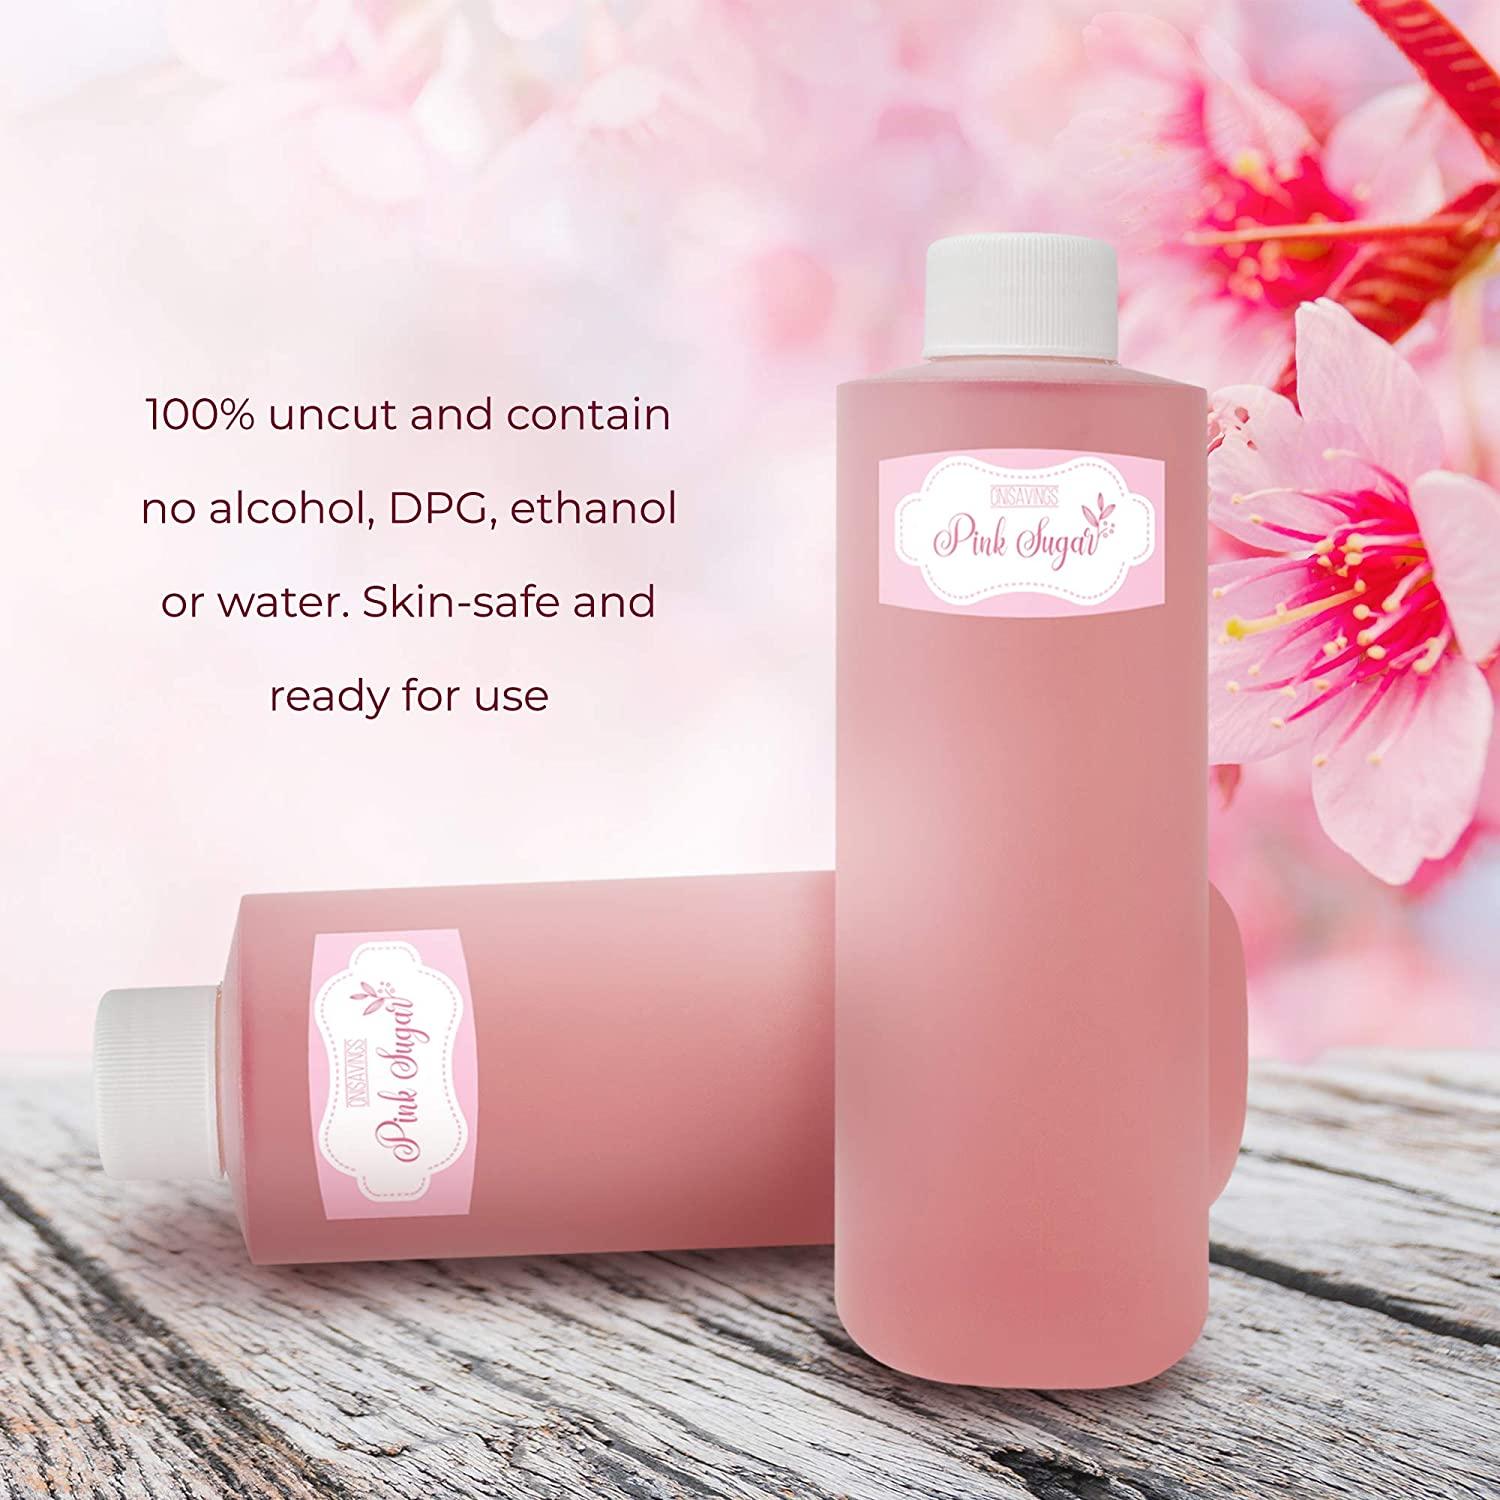 Pink Sugar* Fragrance Oil 538 - Wholesale Supplies Plus